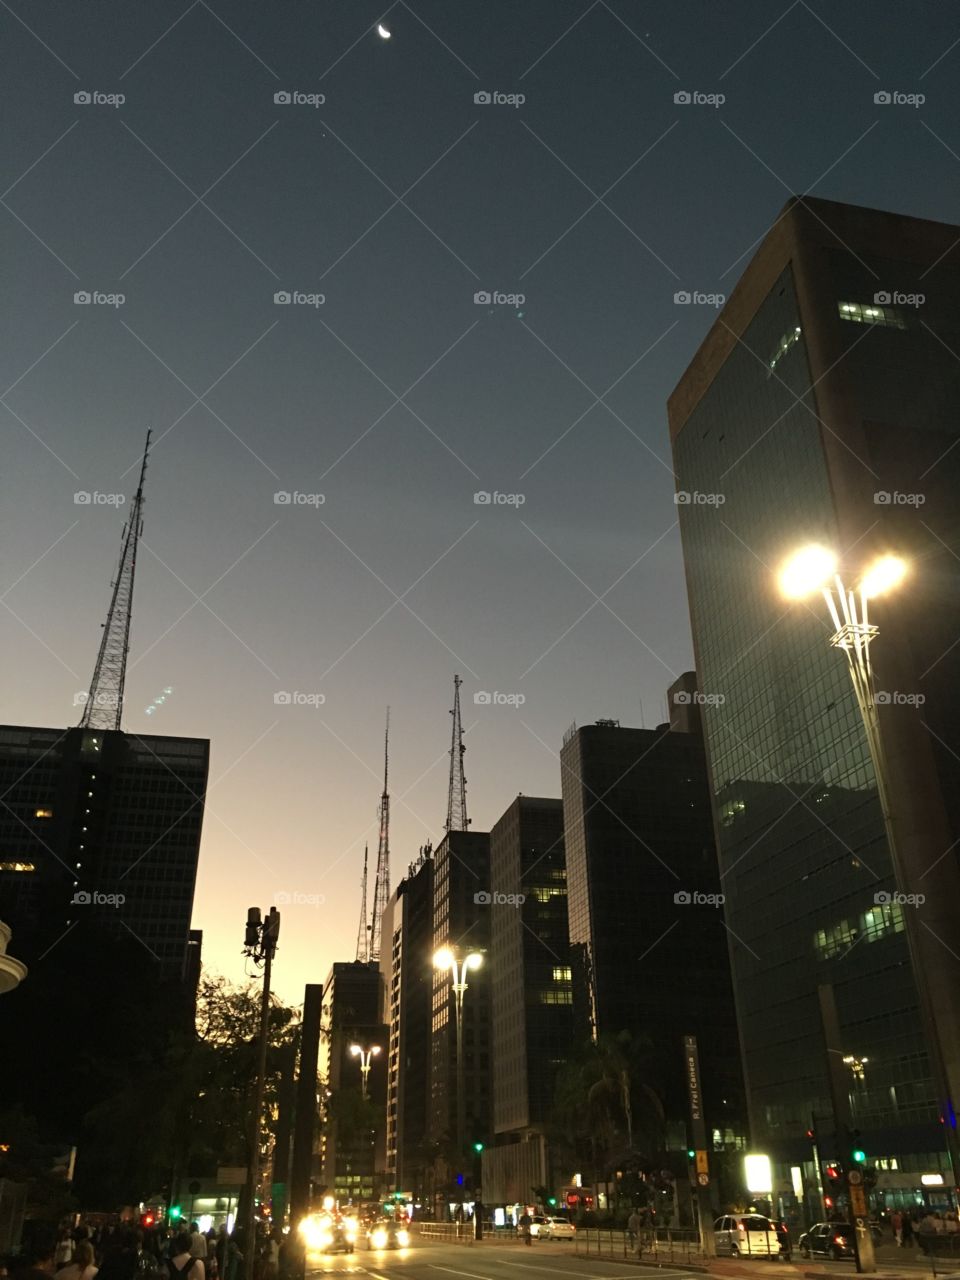 Sunset on the great metropolis of the shoutern hemisphere - São Paulo, Brazil